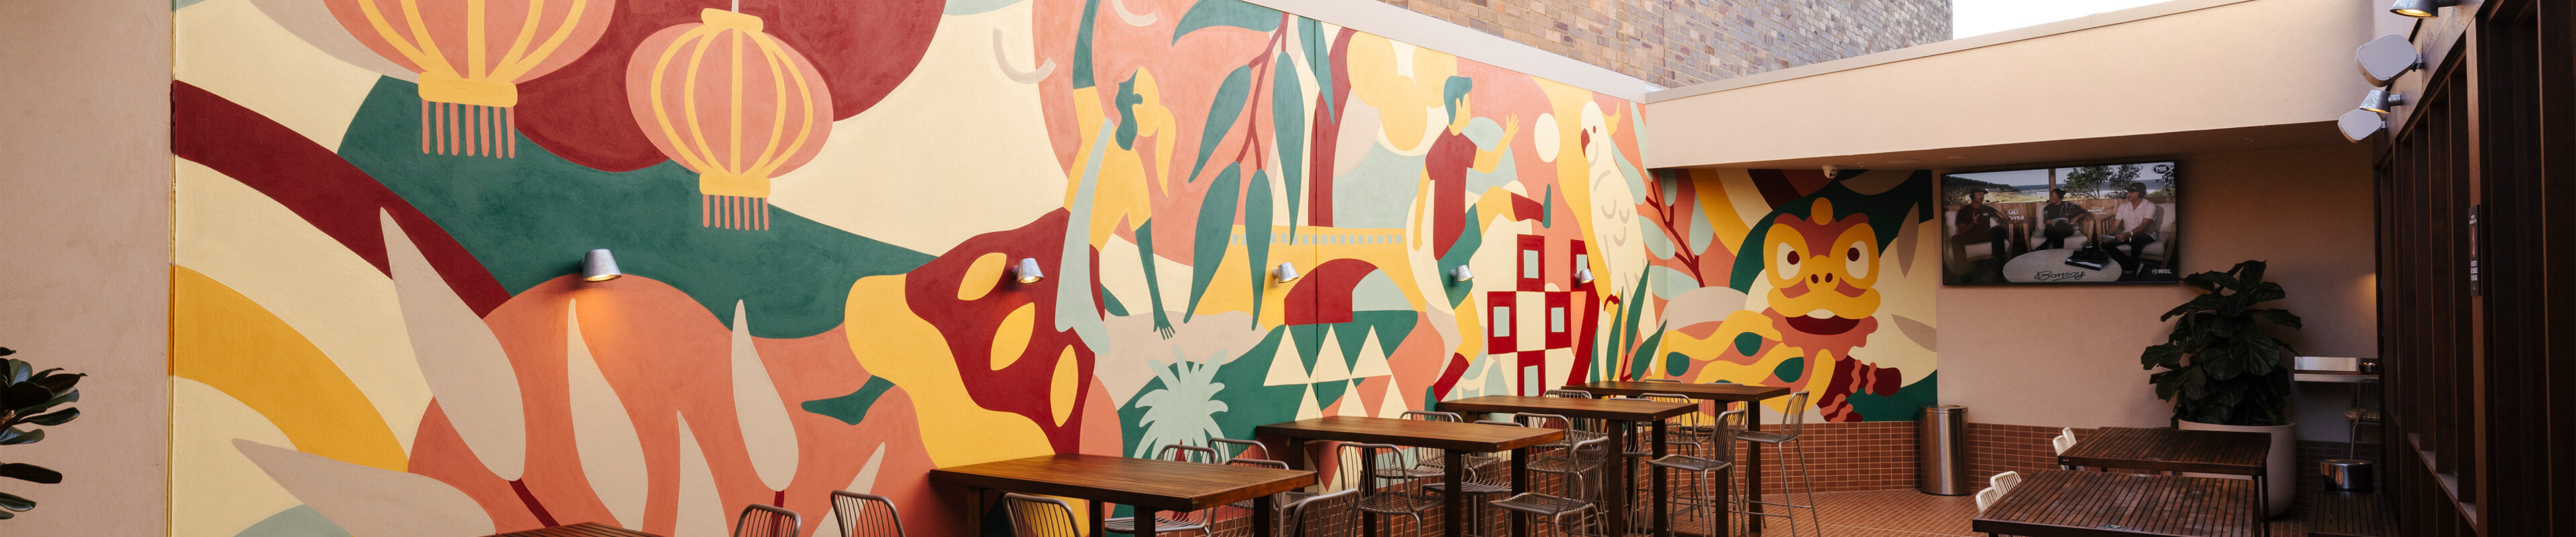 Vibrant mural decorates bar wall.